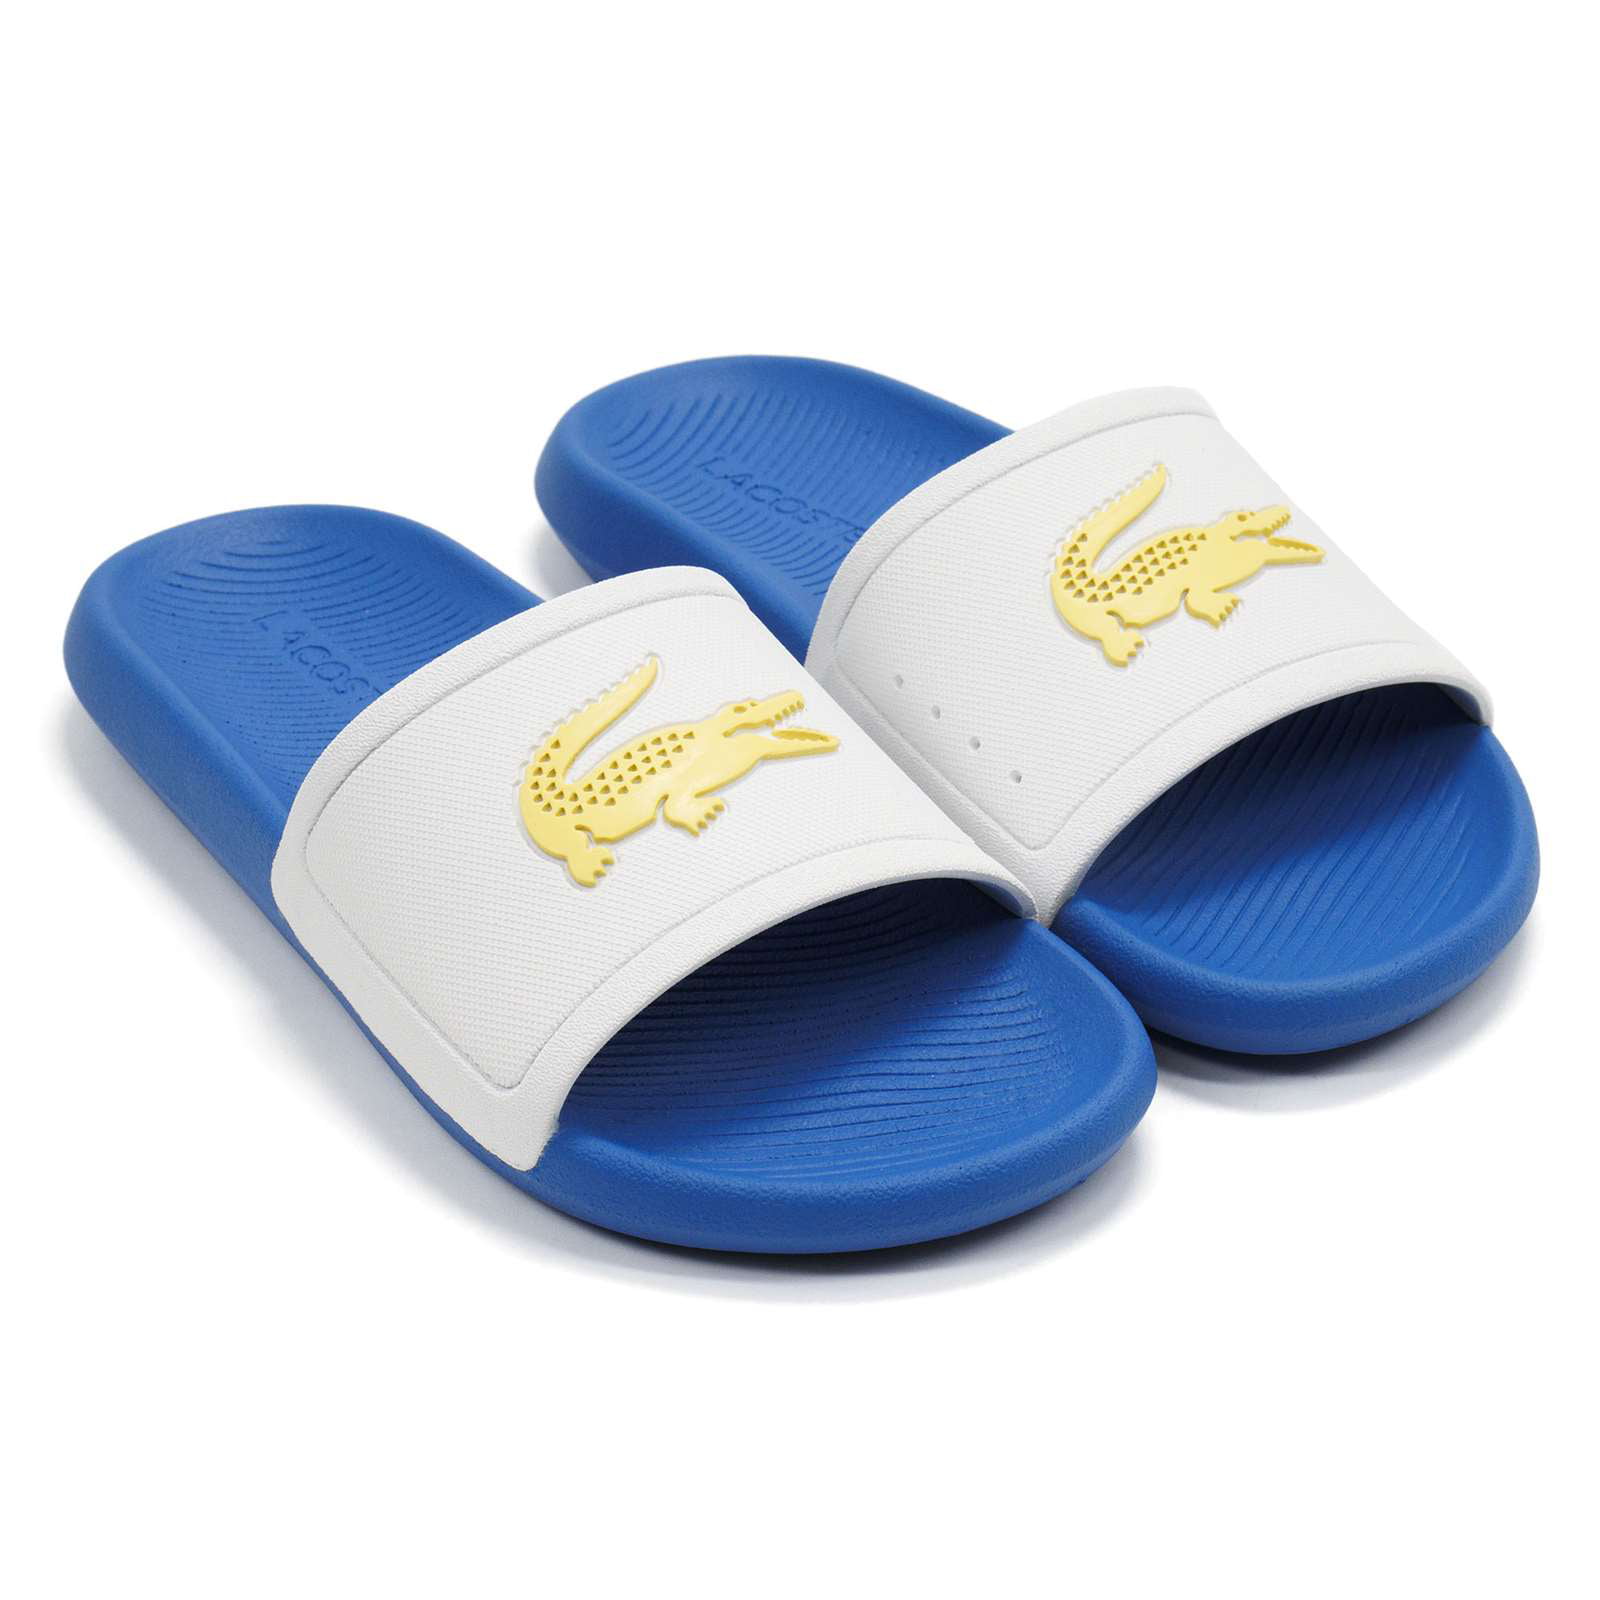 Lacoste Men's Croco Sandals, Blue \ Yellow \ White,10 M US - Walmart.com